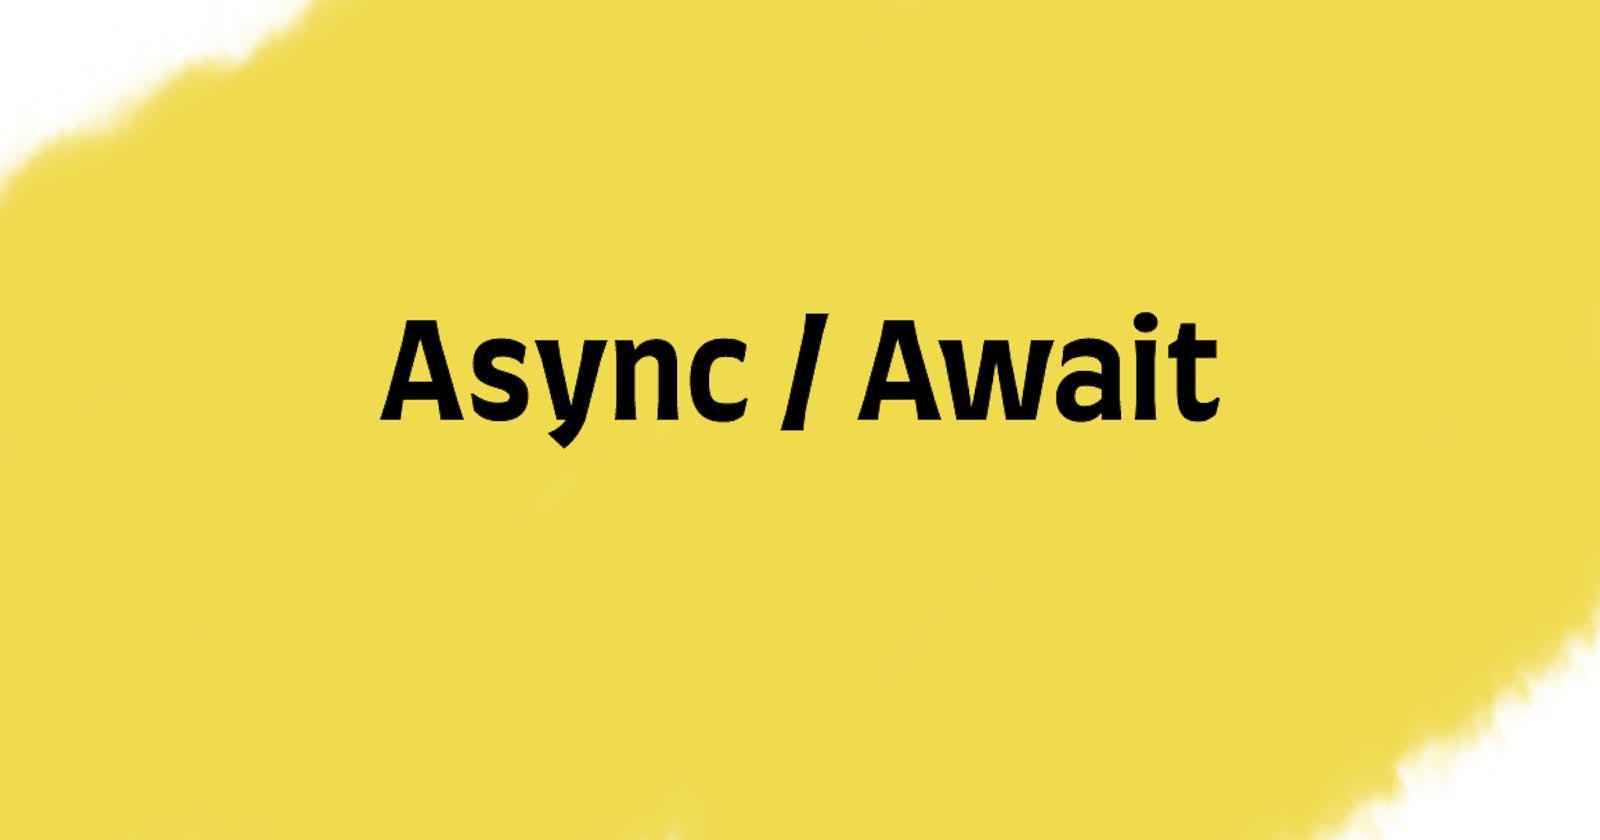 Breakdown of Async/Await in Javascript